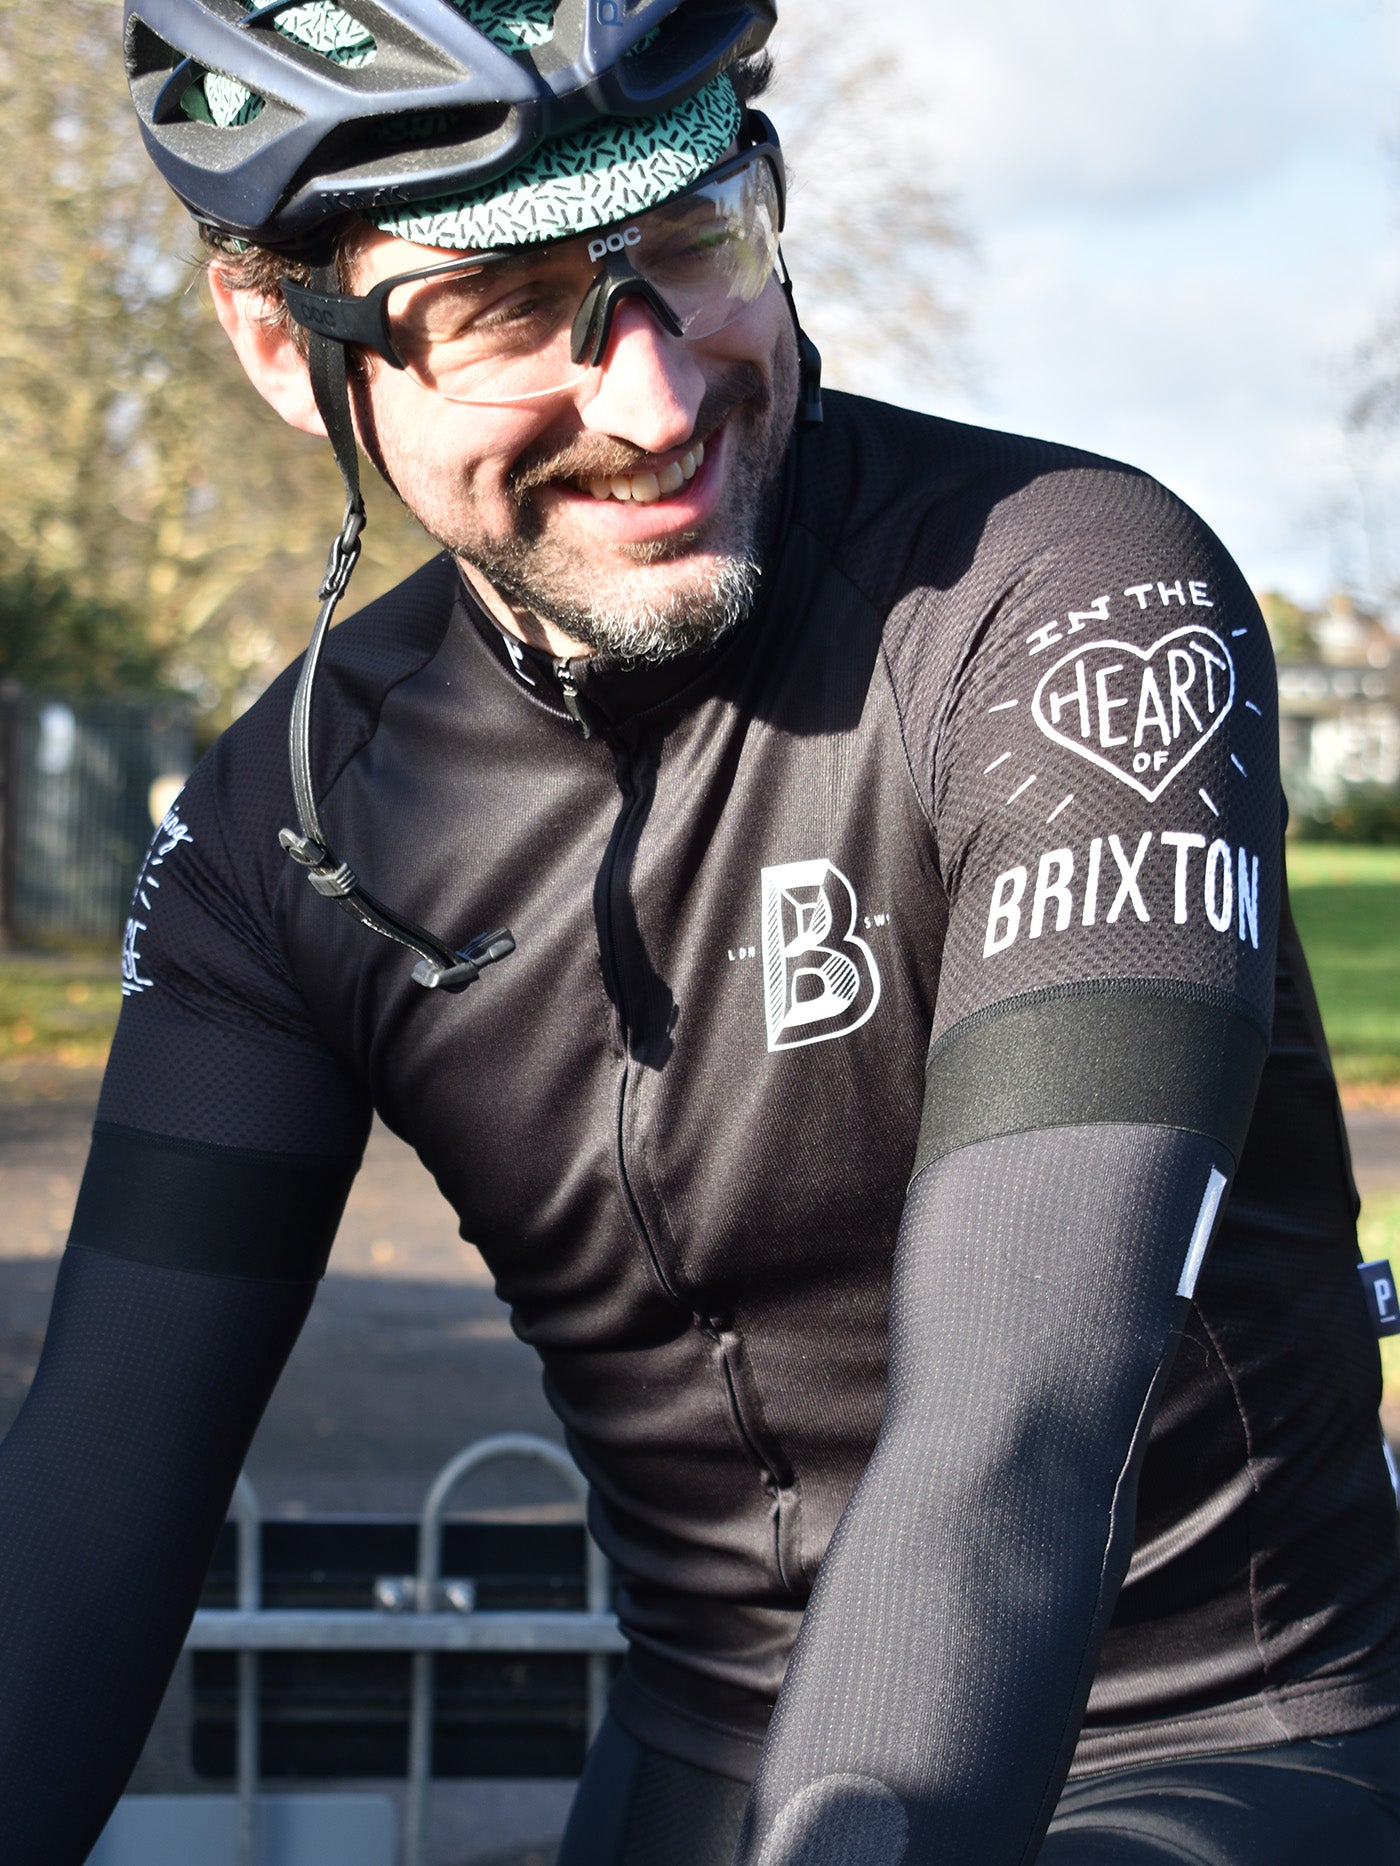 Brixton Brewery x Paria Black & White Megawatt Cycling Jersey